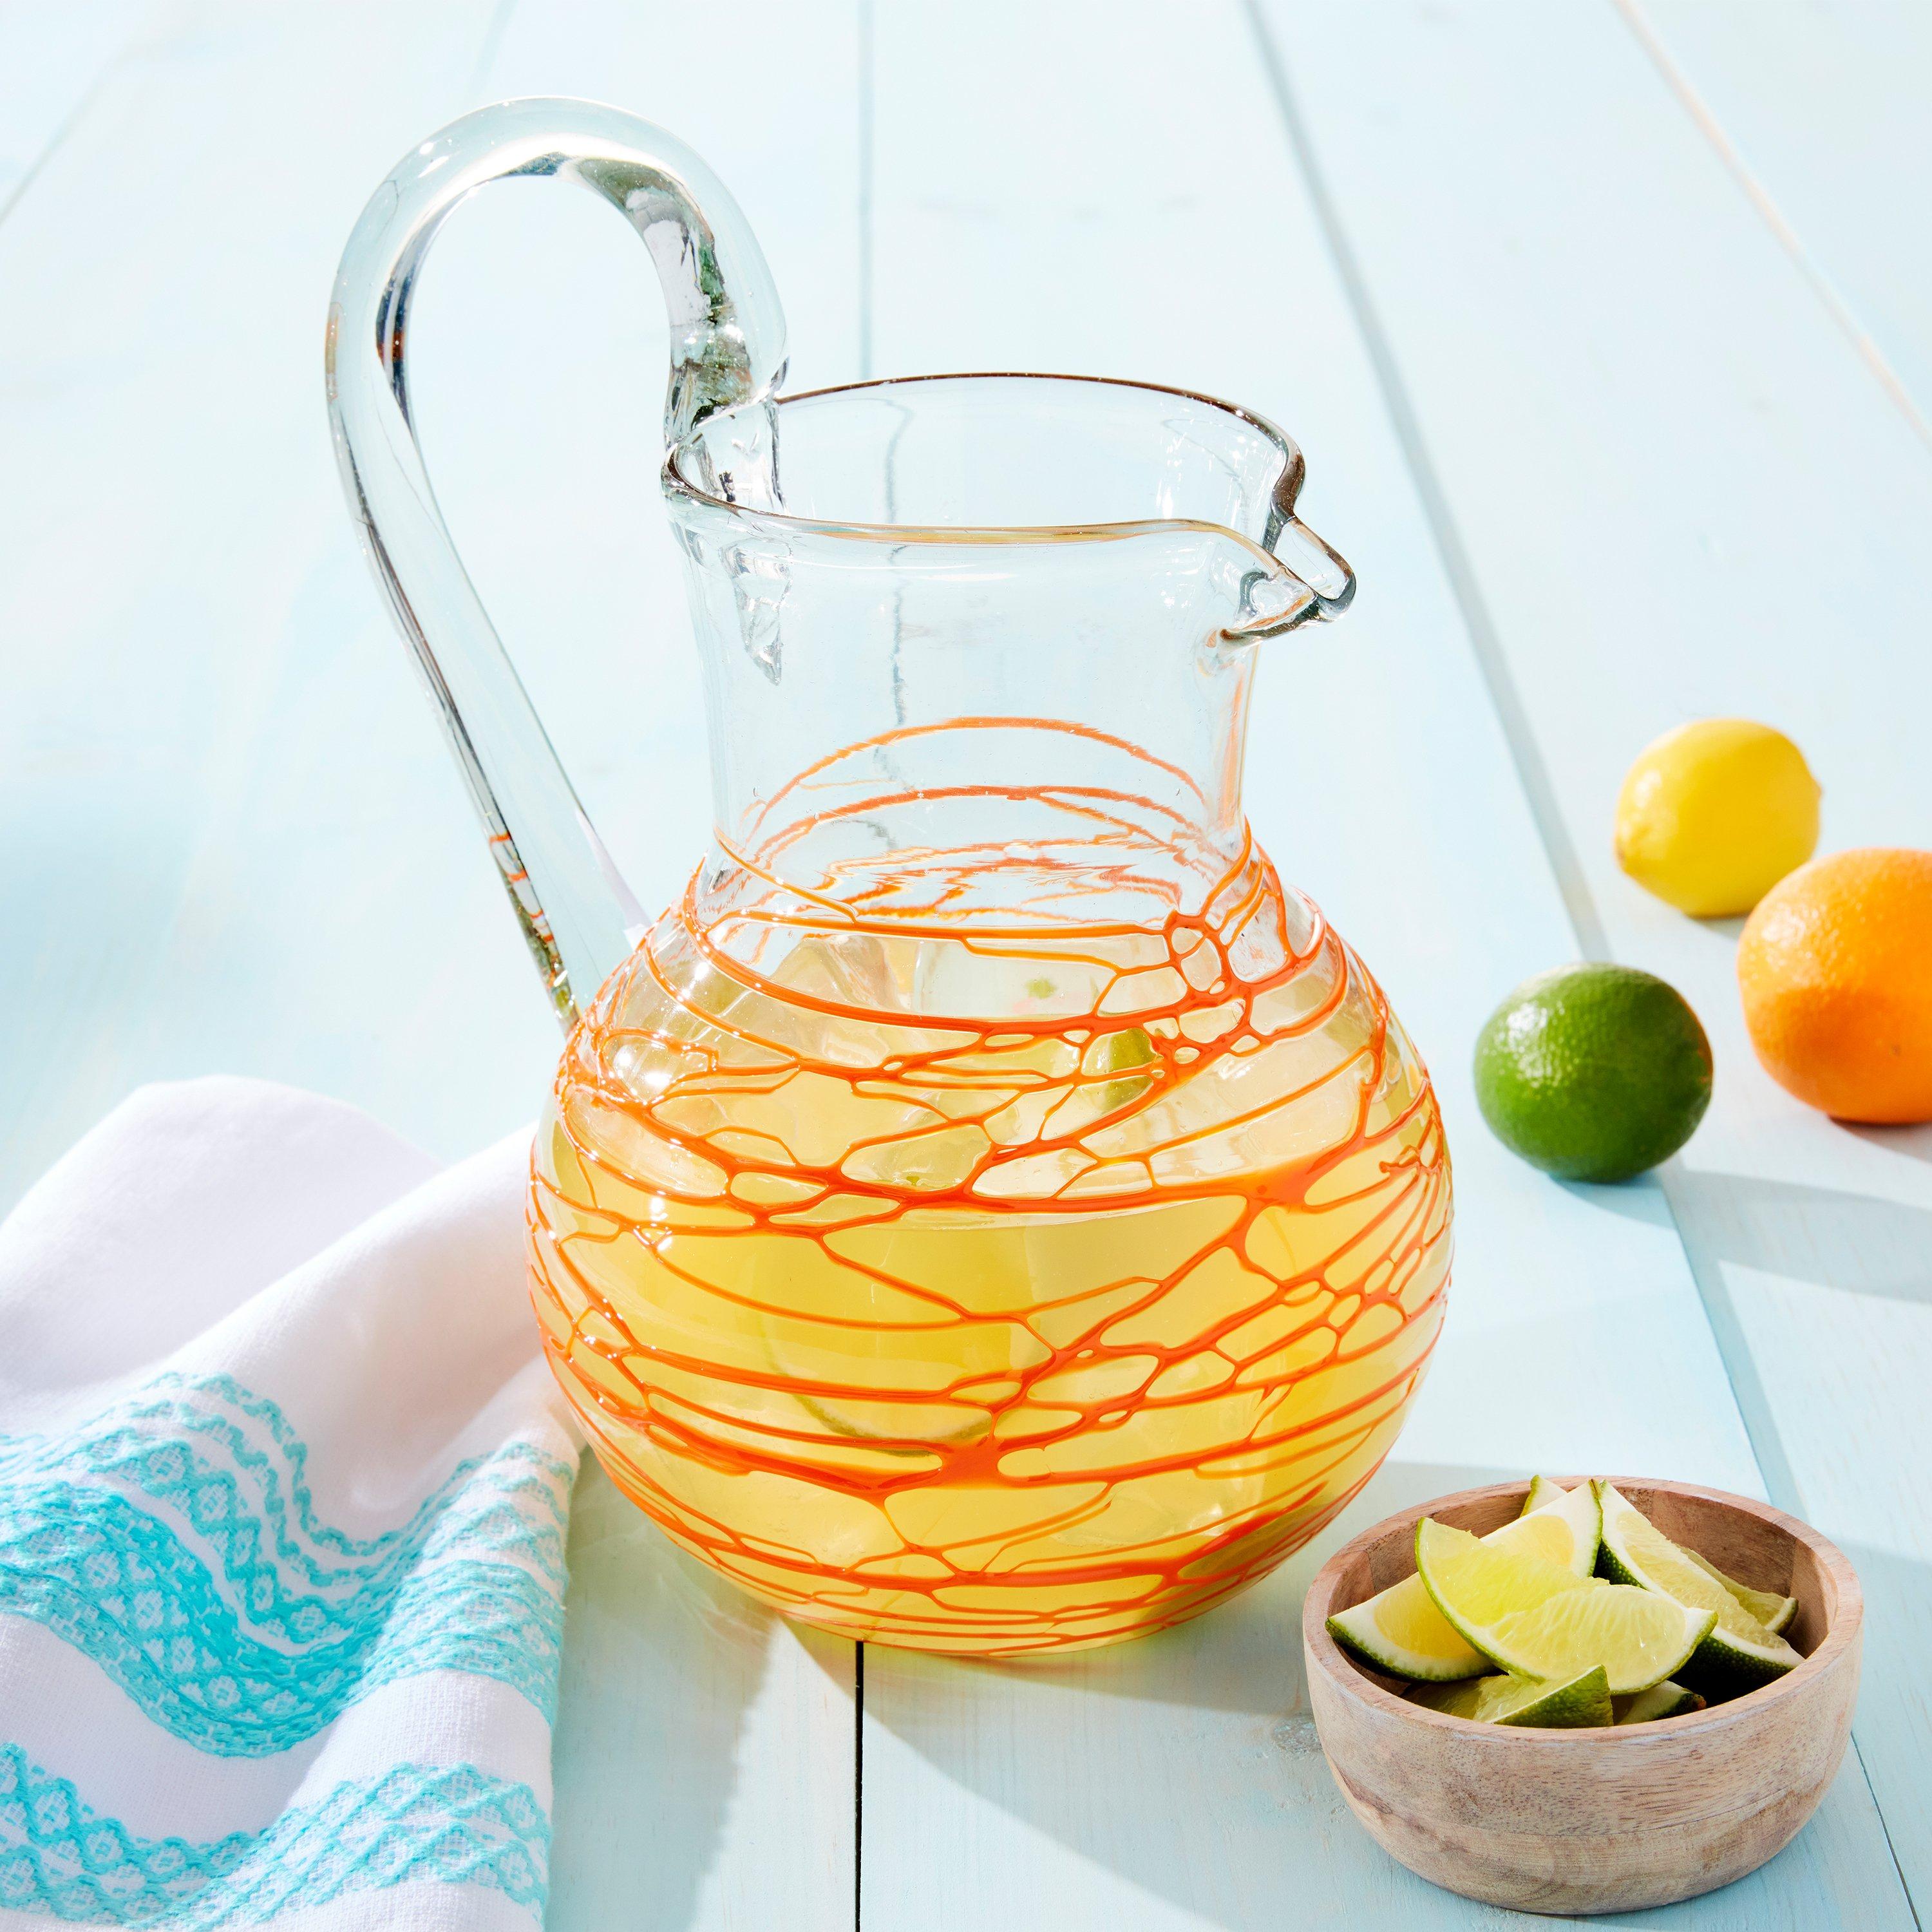 Verve Culture Handblown Glass Carafe: Orange Swirl